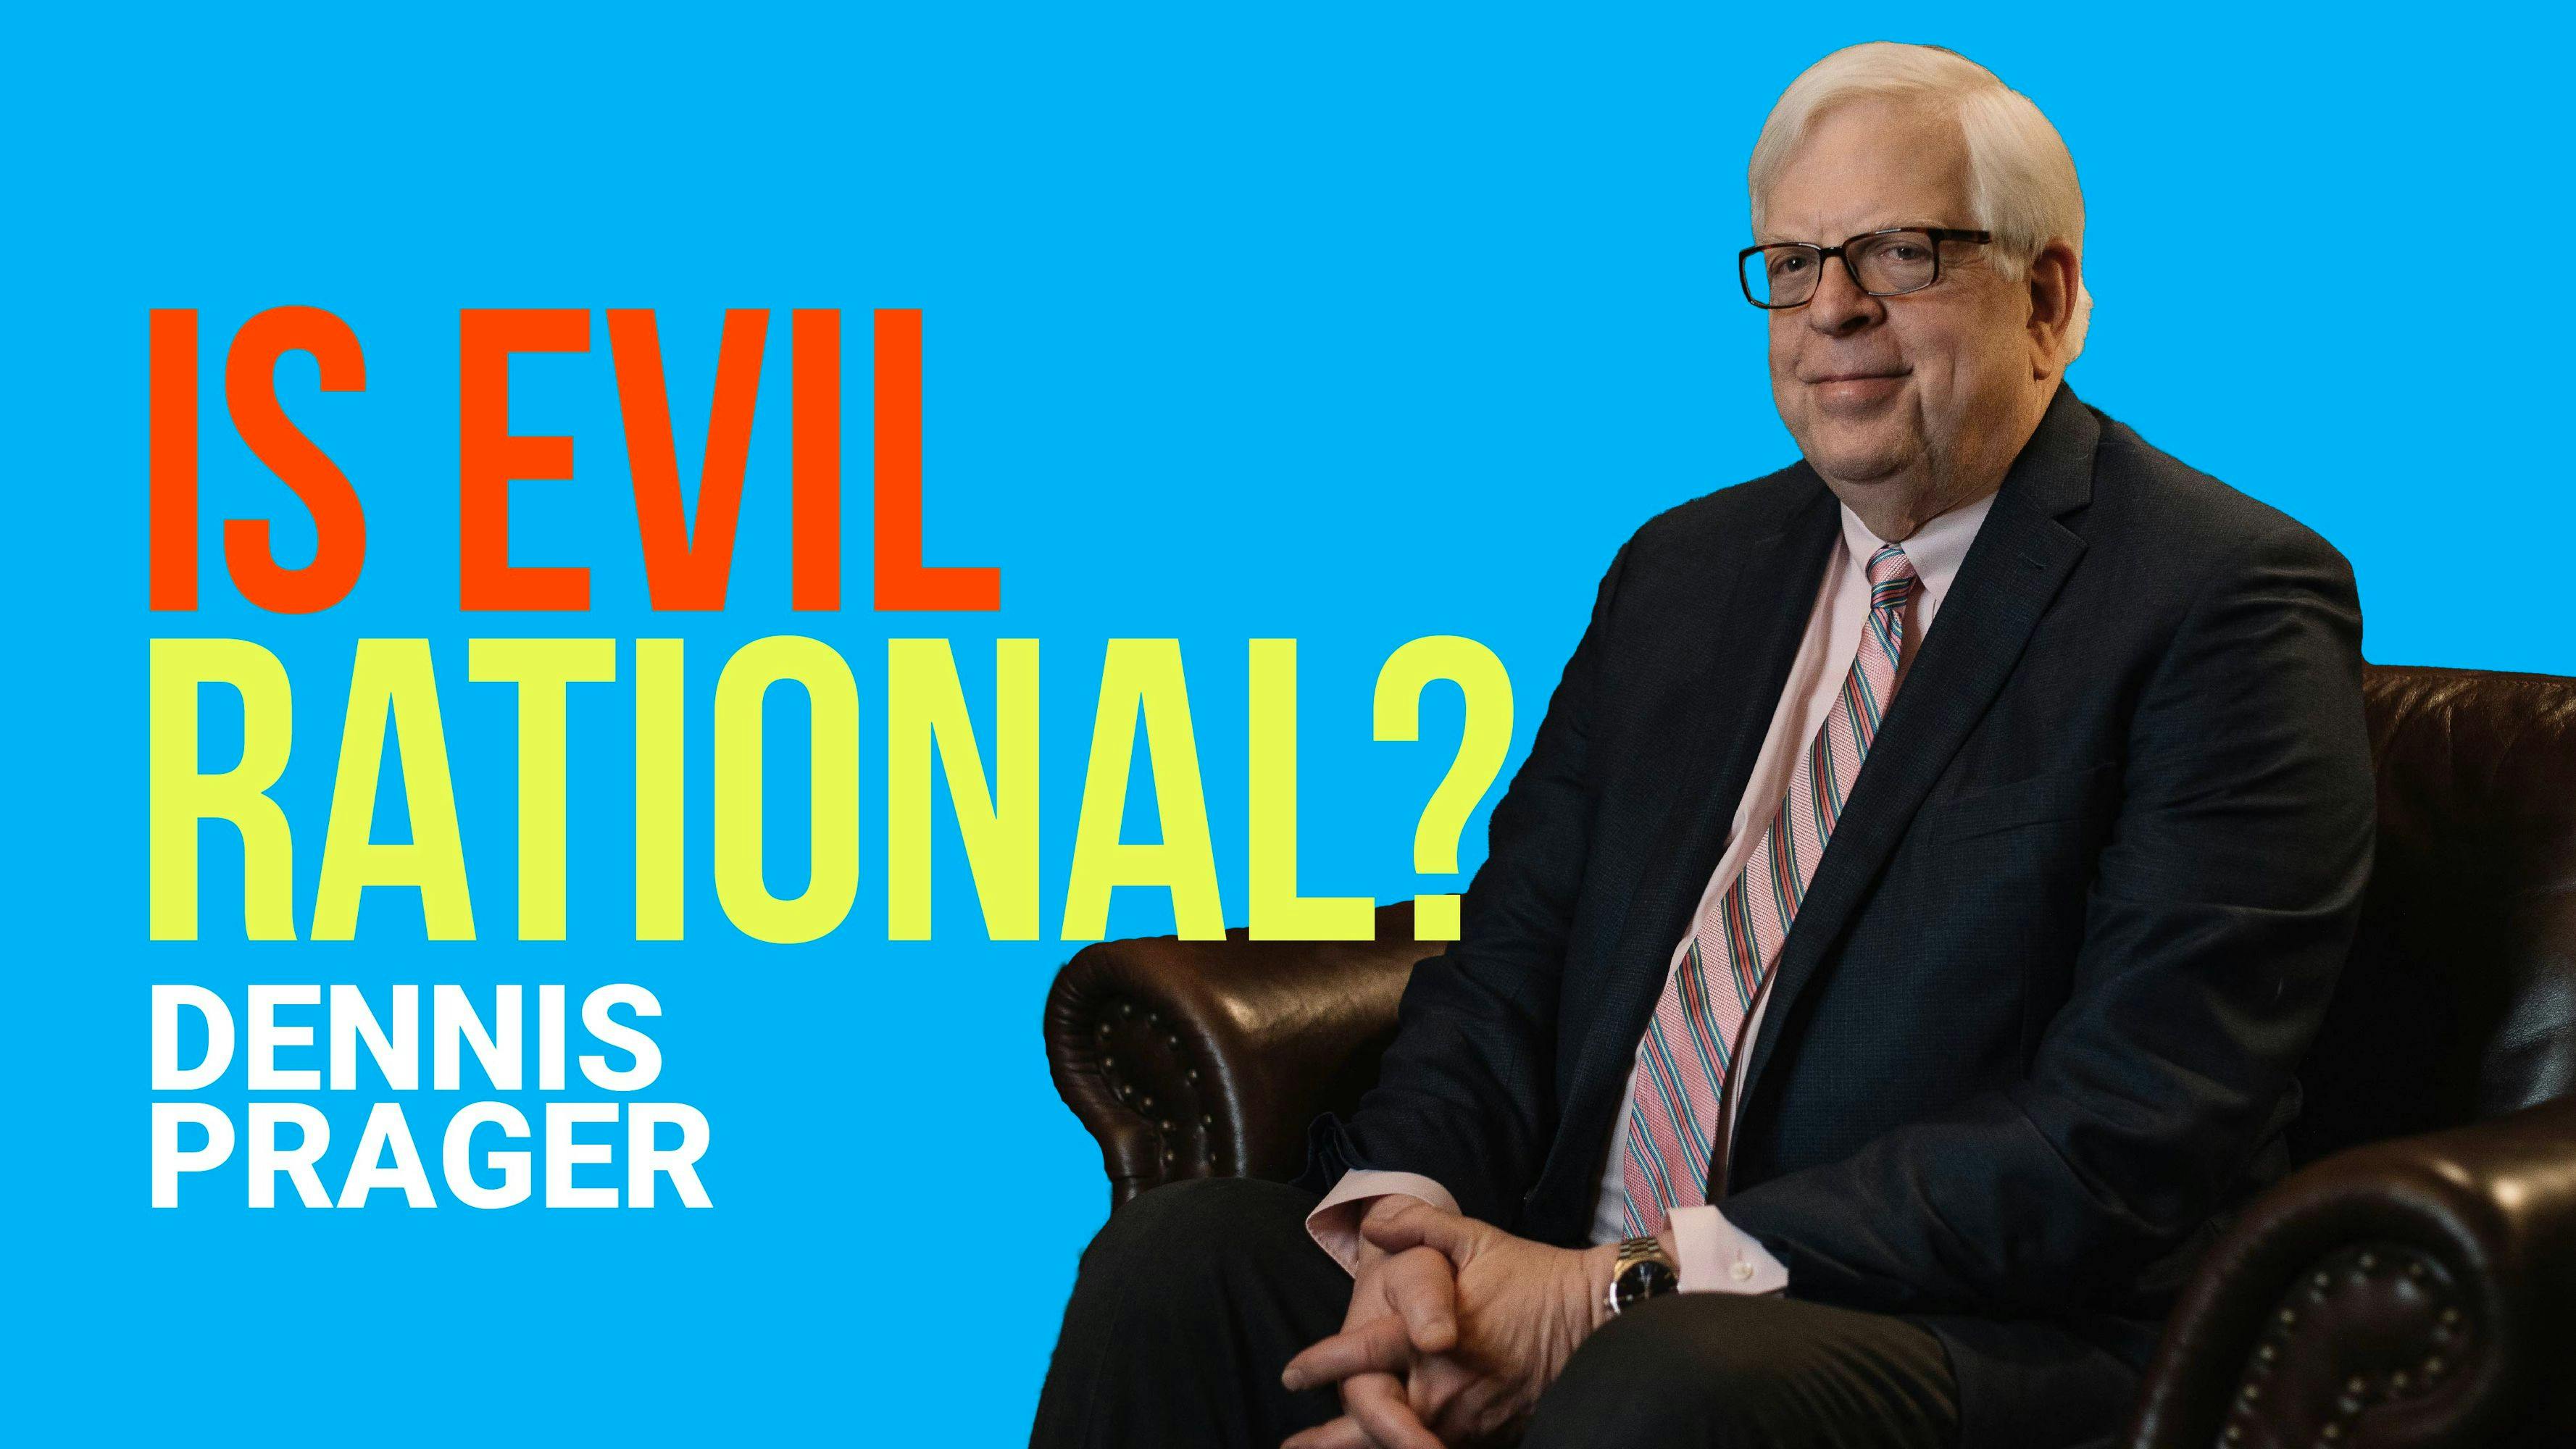 Is Evil Rational?